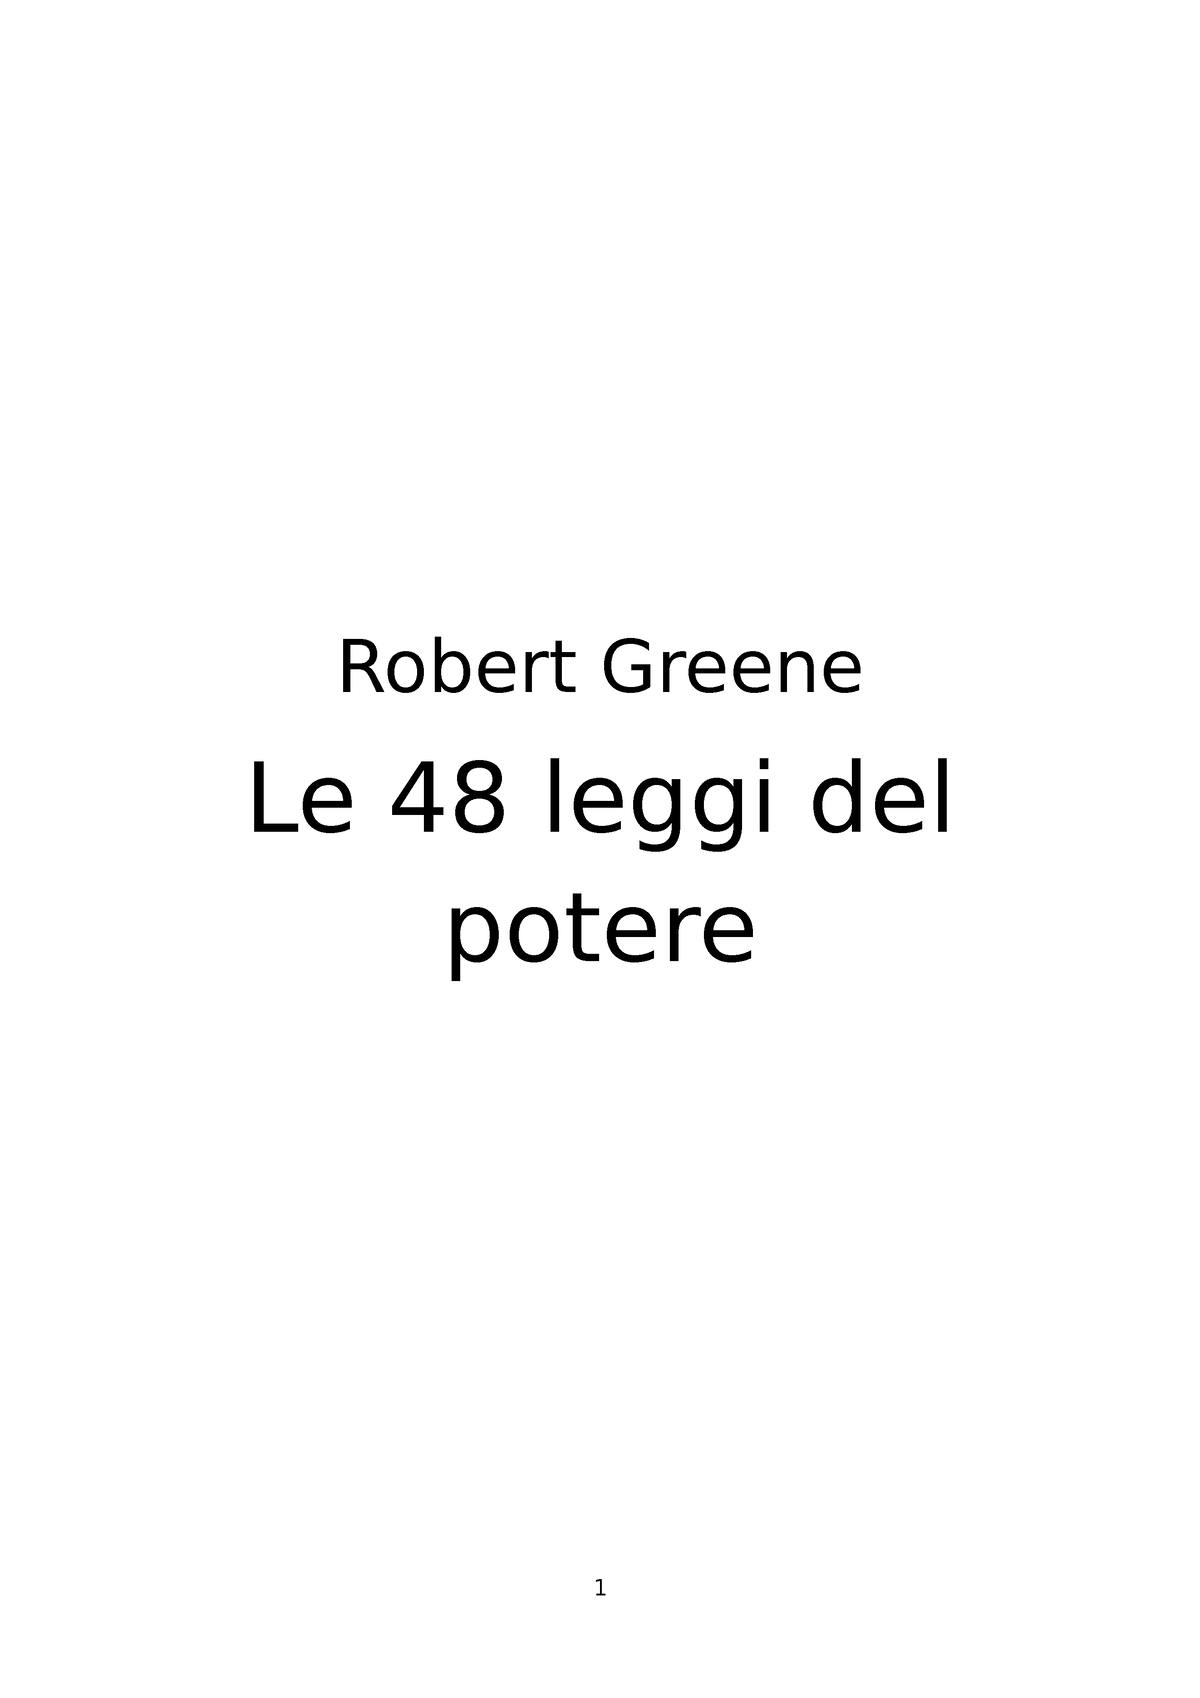 Kupdf - Leggi del potere - Robert Greene Le 48 leggi del potere Contents -  Studocu